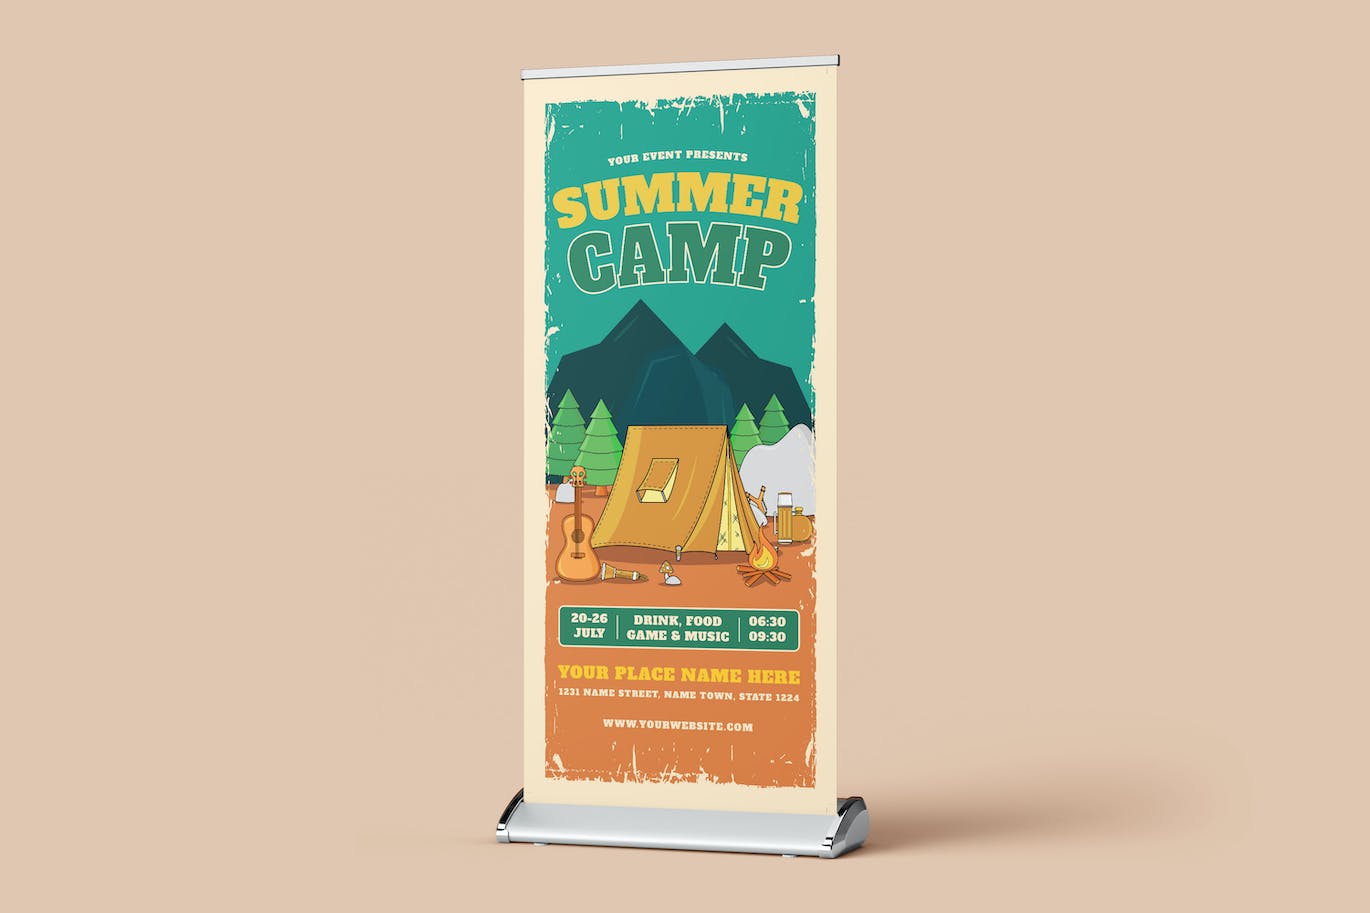 夏令营广告易拉宝设计模板 Summer Camp Rollup Banner